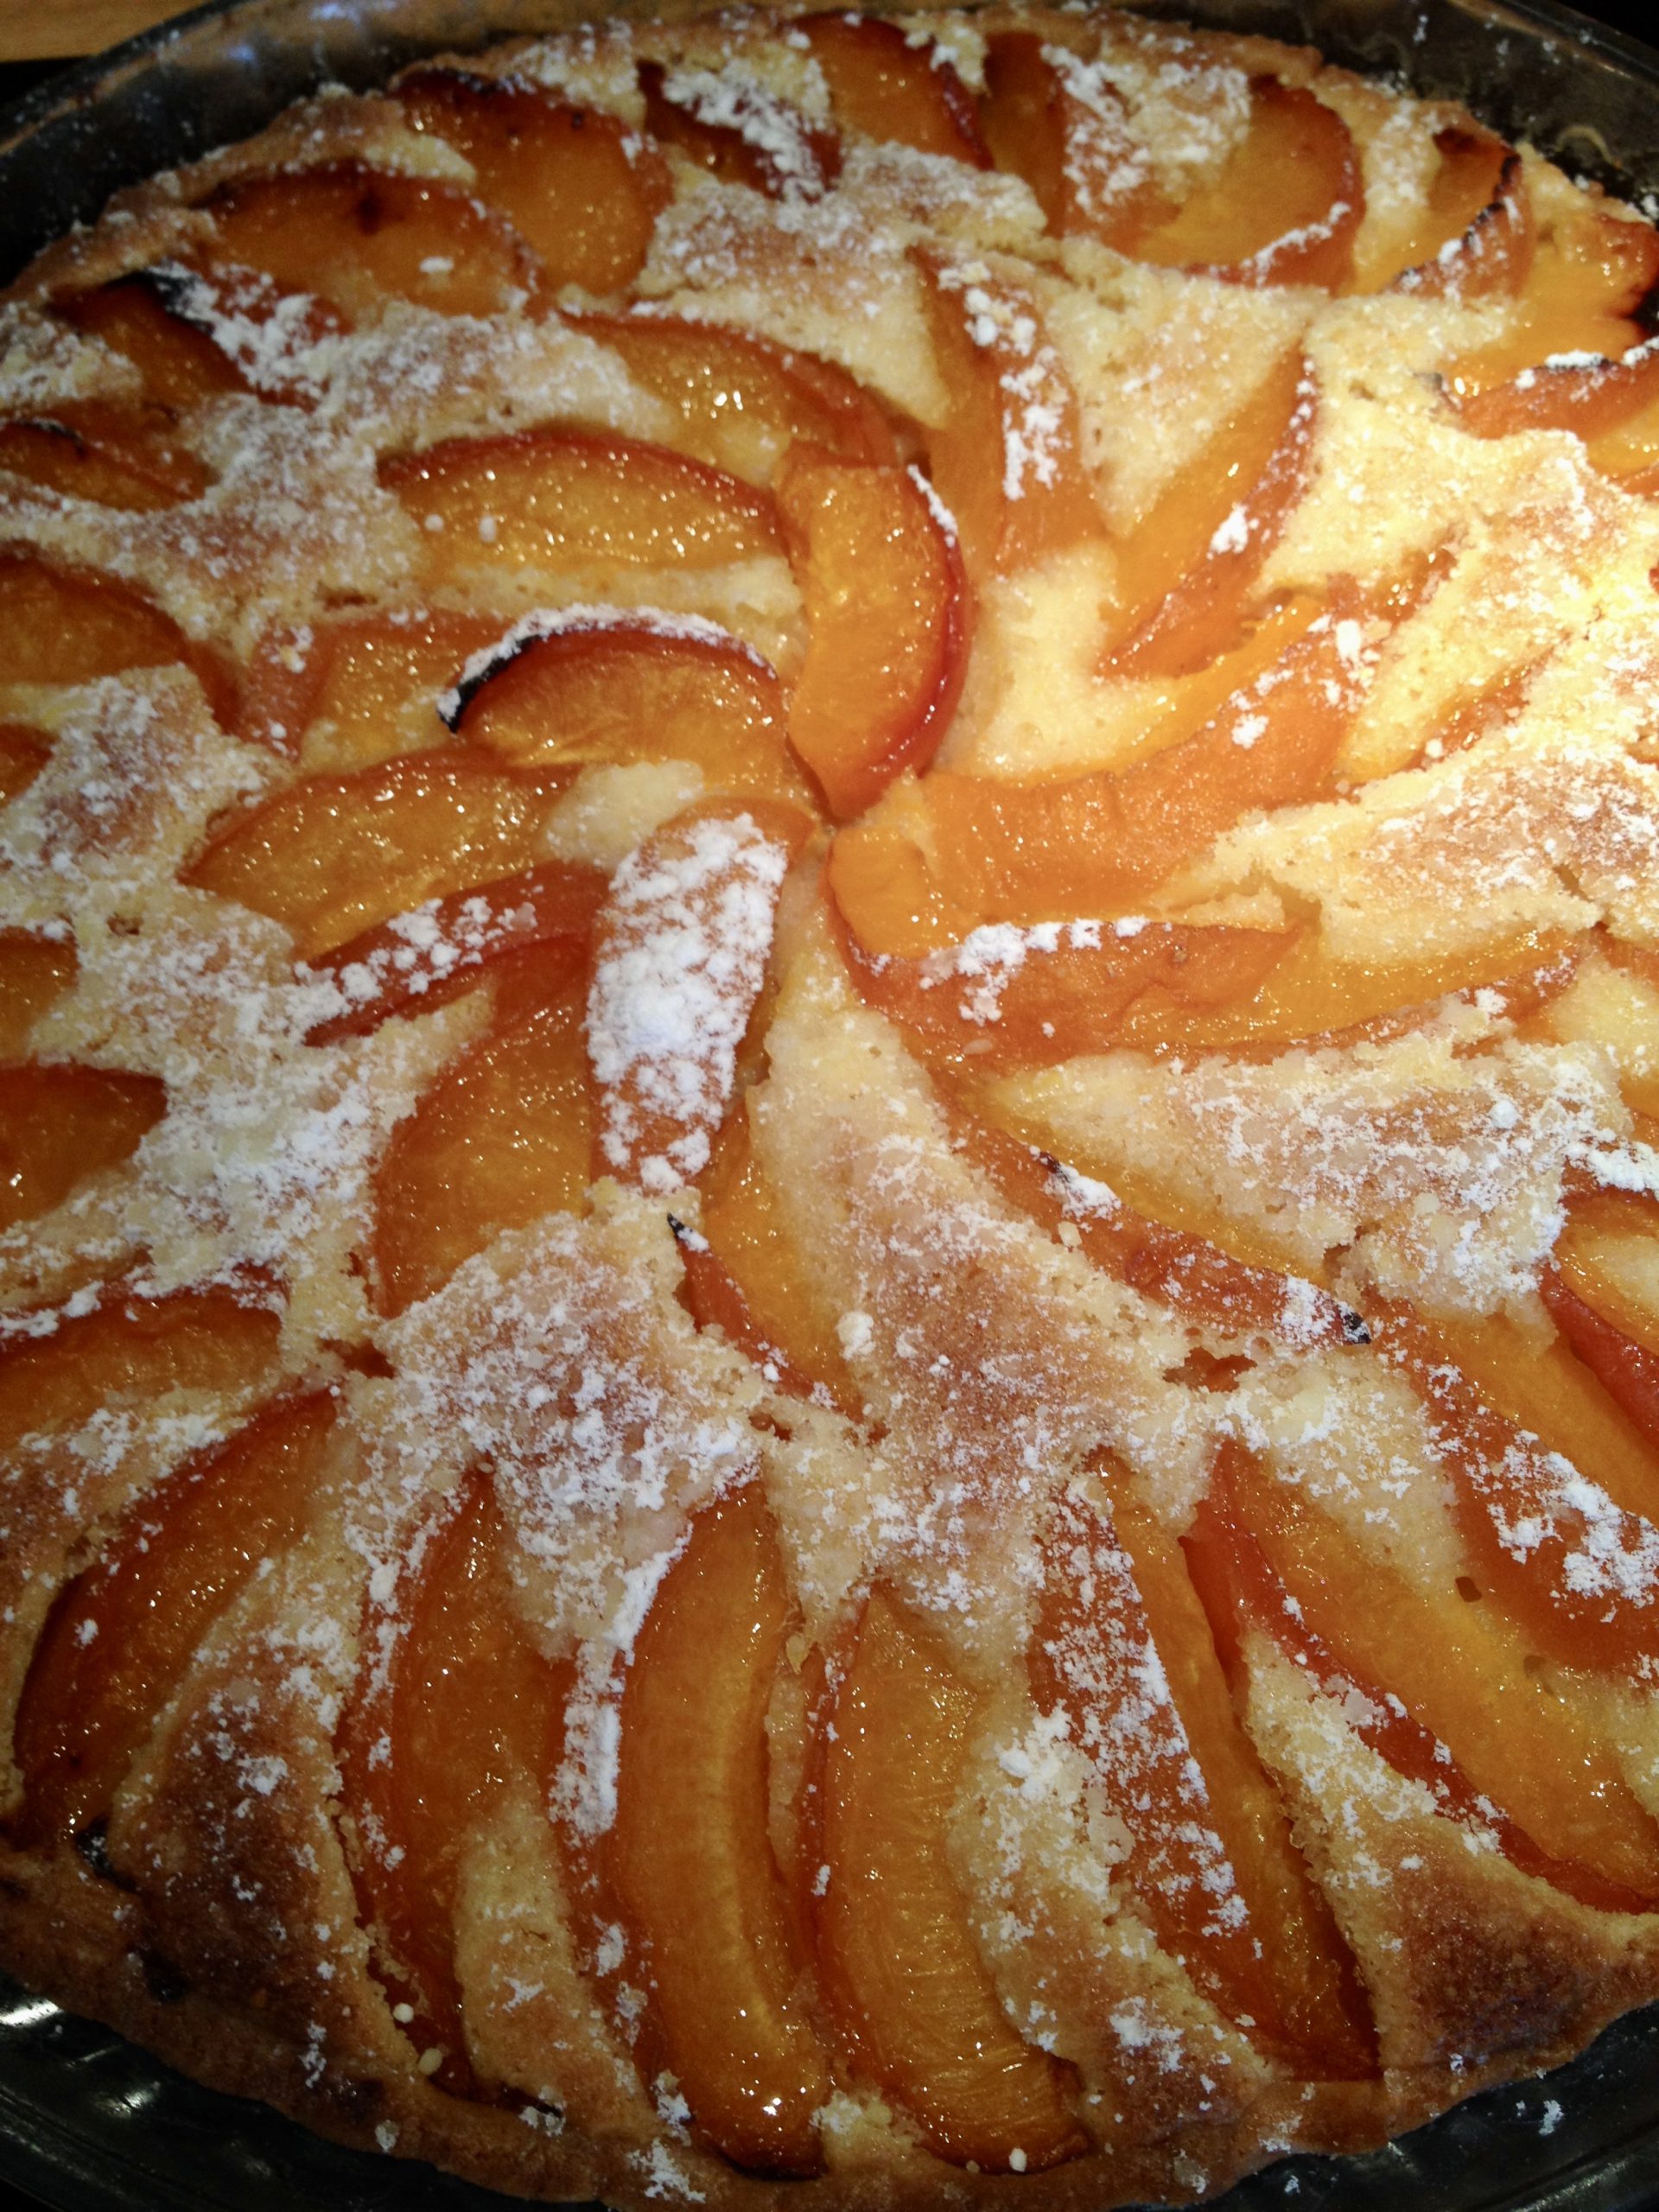 Homemade apricot tart